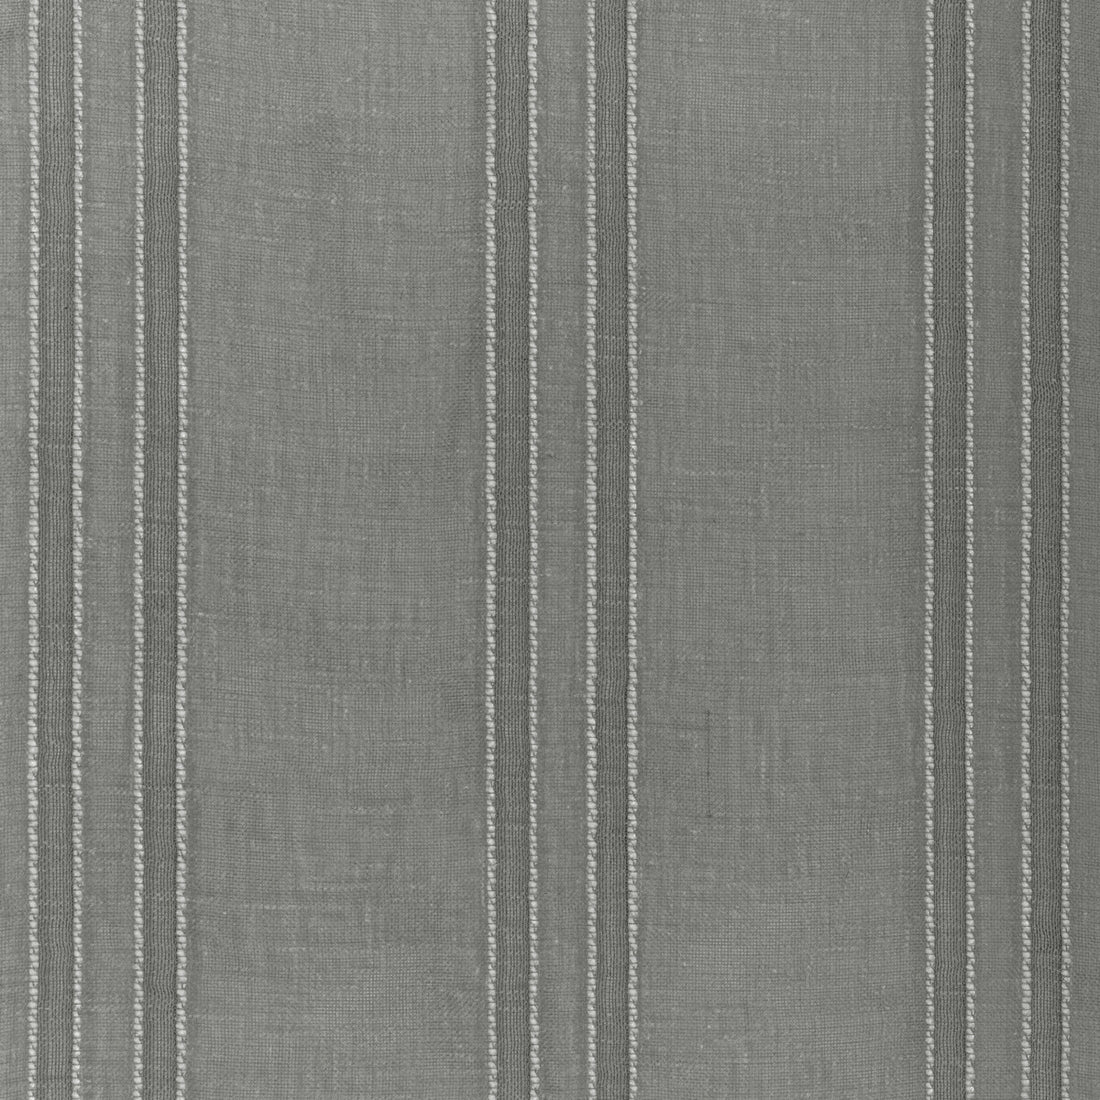 Kravet Basics fabric in 4805-11 color - pattern 4805.11.0 - by Kravet Basics in the Gis collection